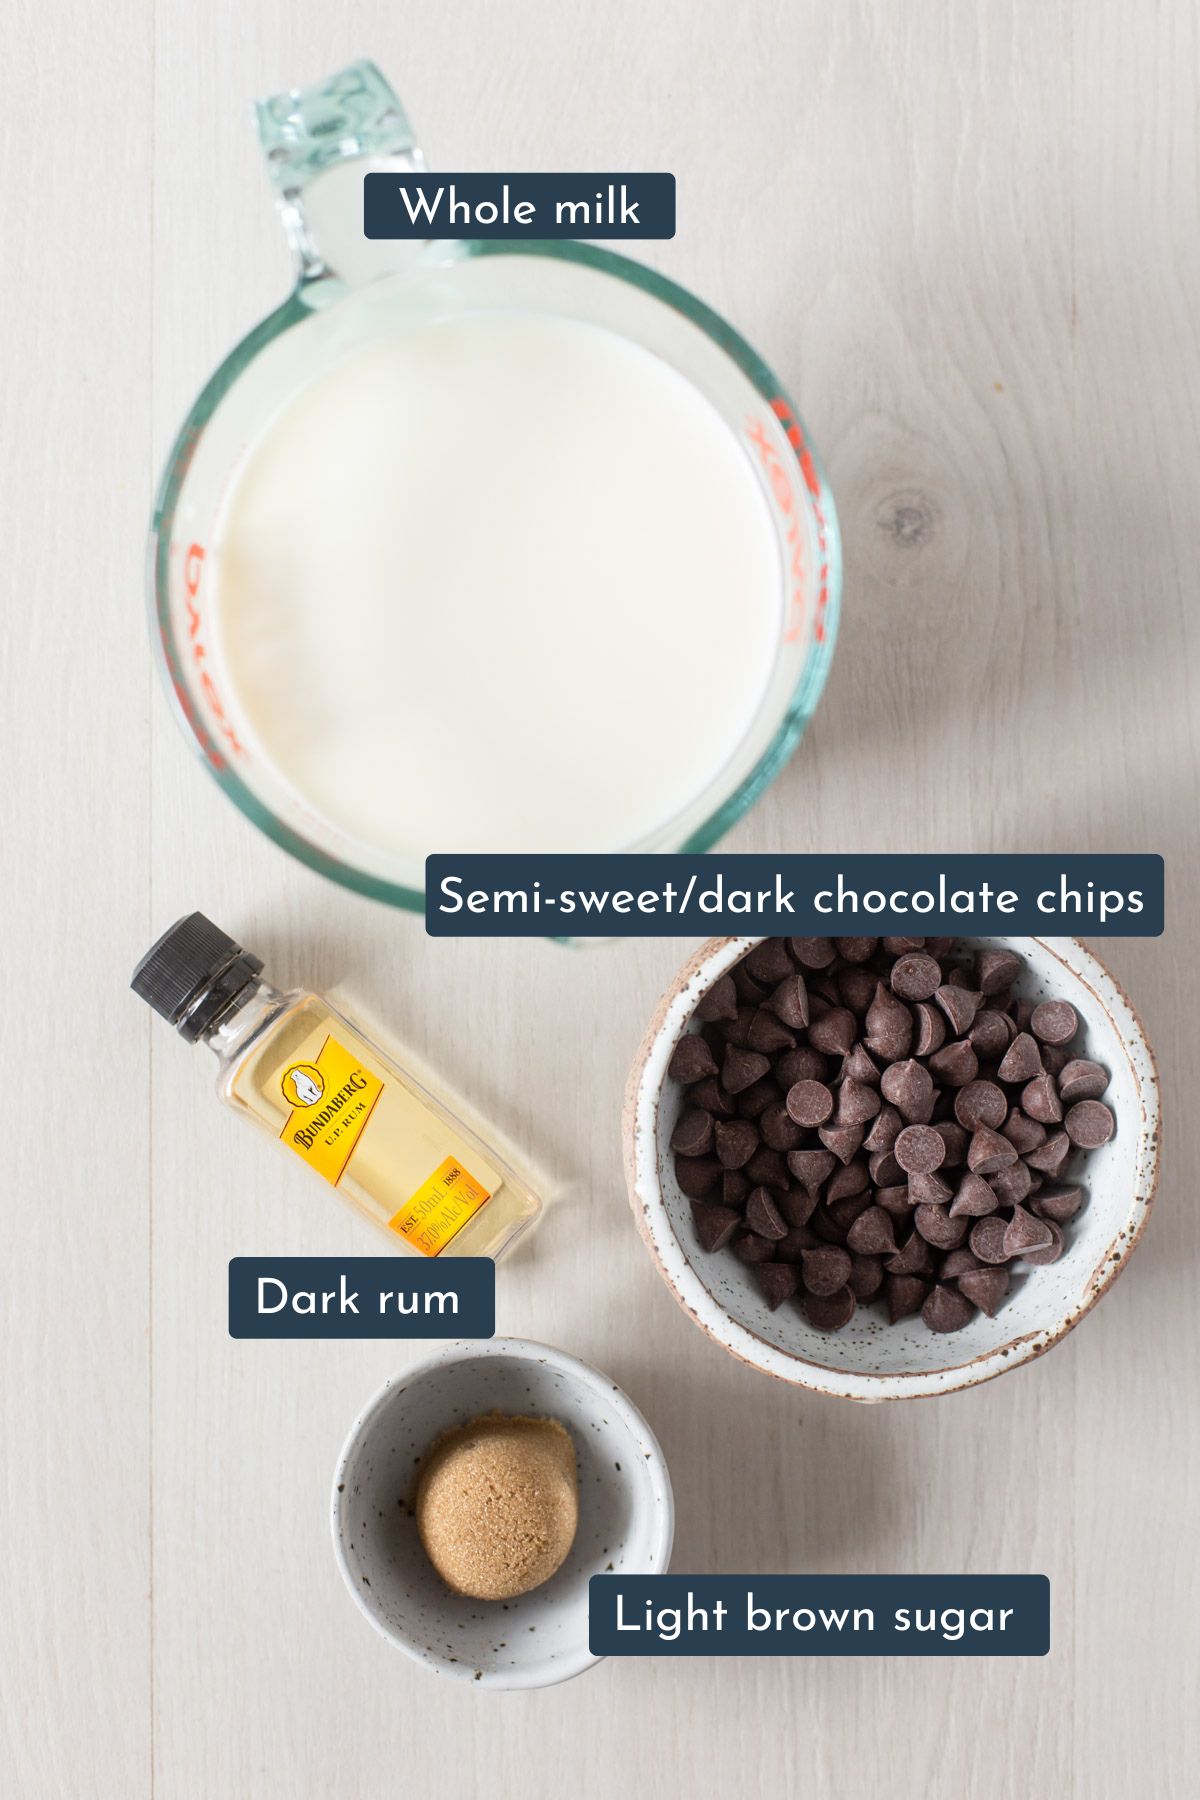 Ingredients to make rum hot chocolate are whole milk, semi-sweet/dark chocolate chips, dark rum and light brown sugar.